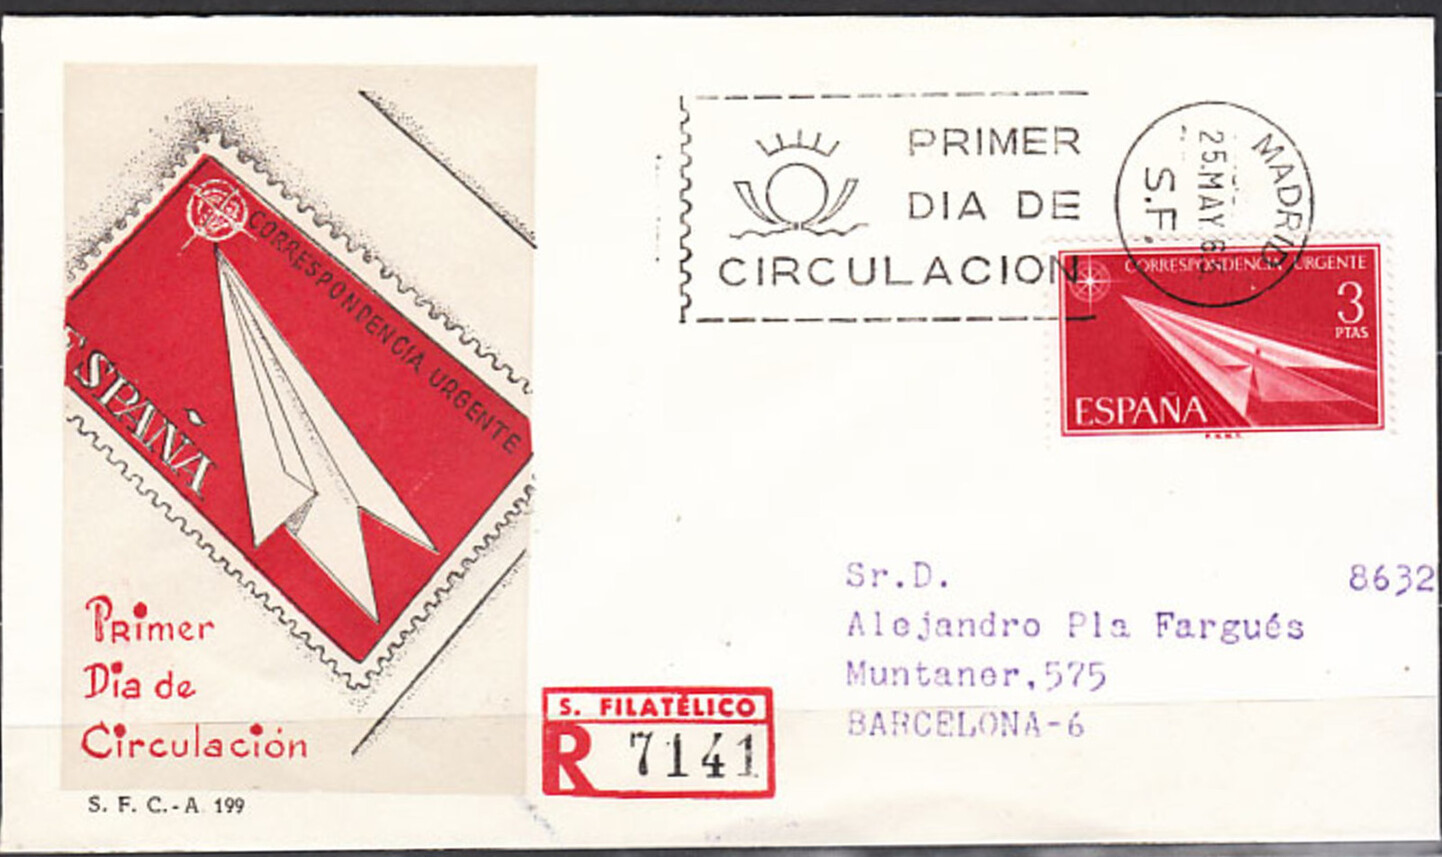 Spain 1965 Correspondencia Urgente - dart (3p) (FDC)